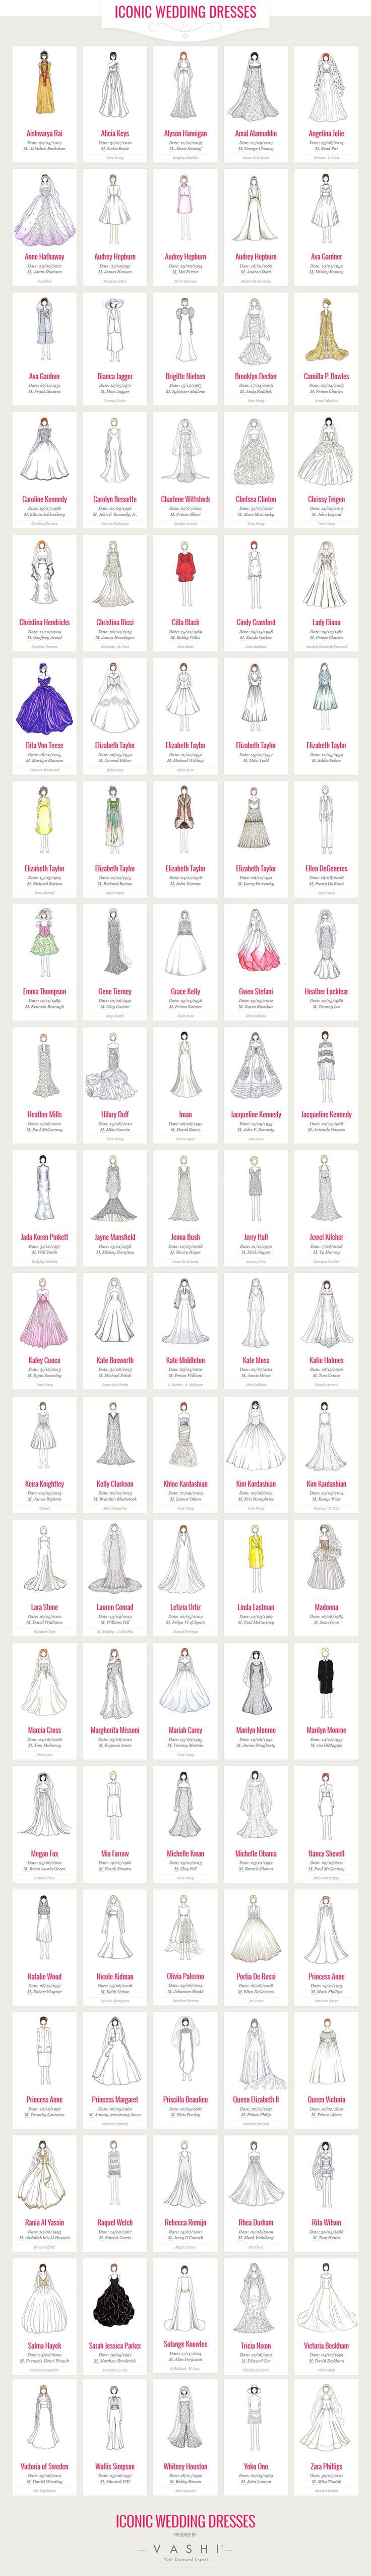 Wedding - The 100 Most Iconic Wedding Dresses